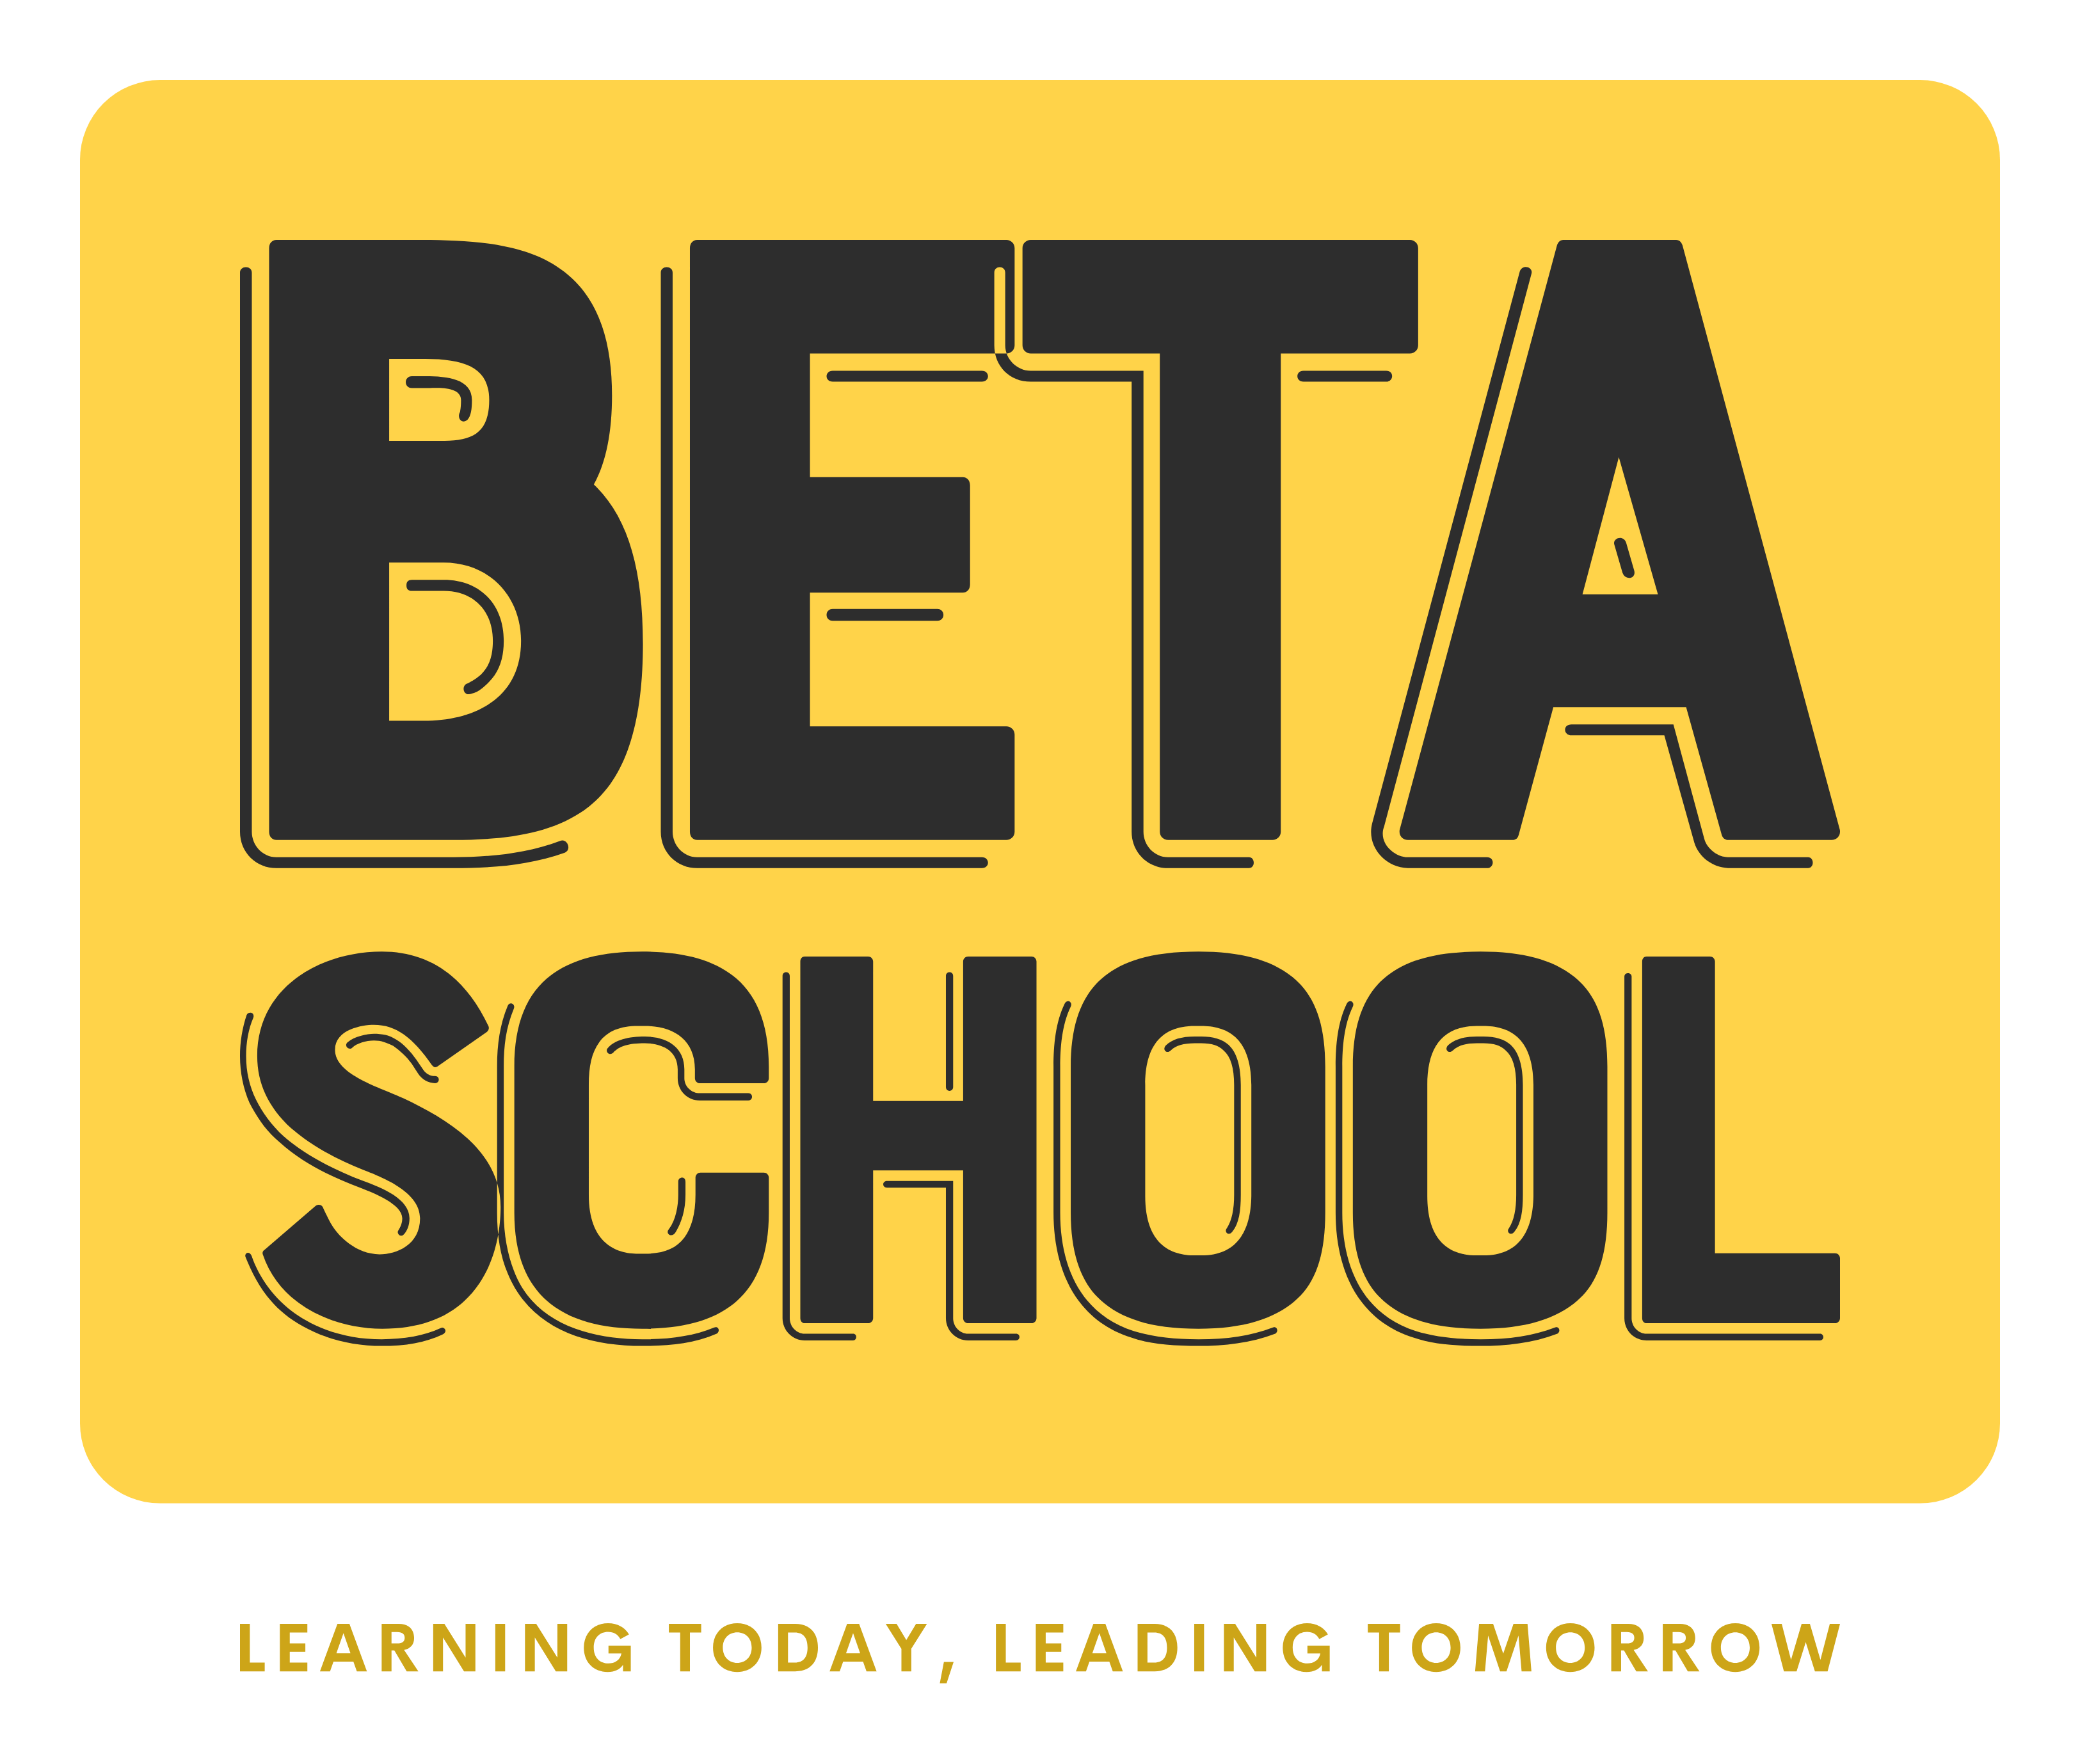 Betaschool Logo